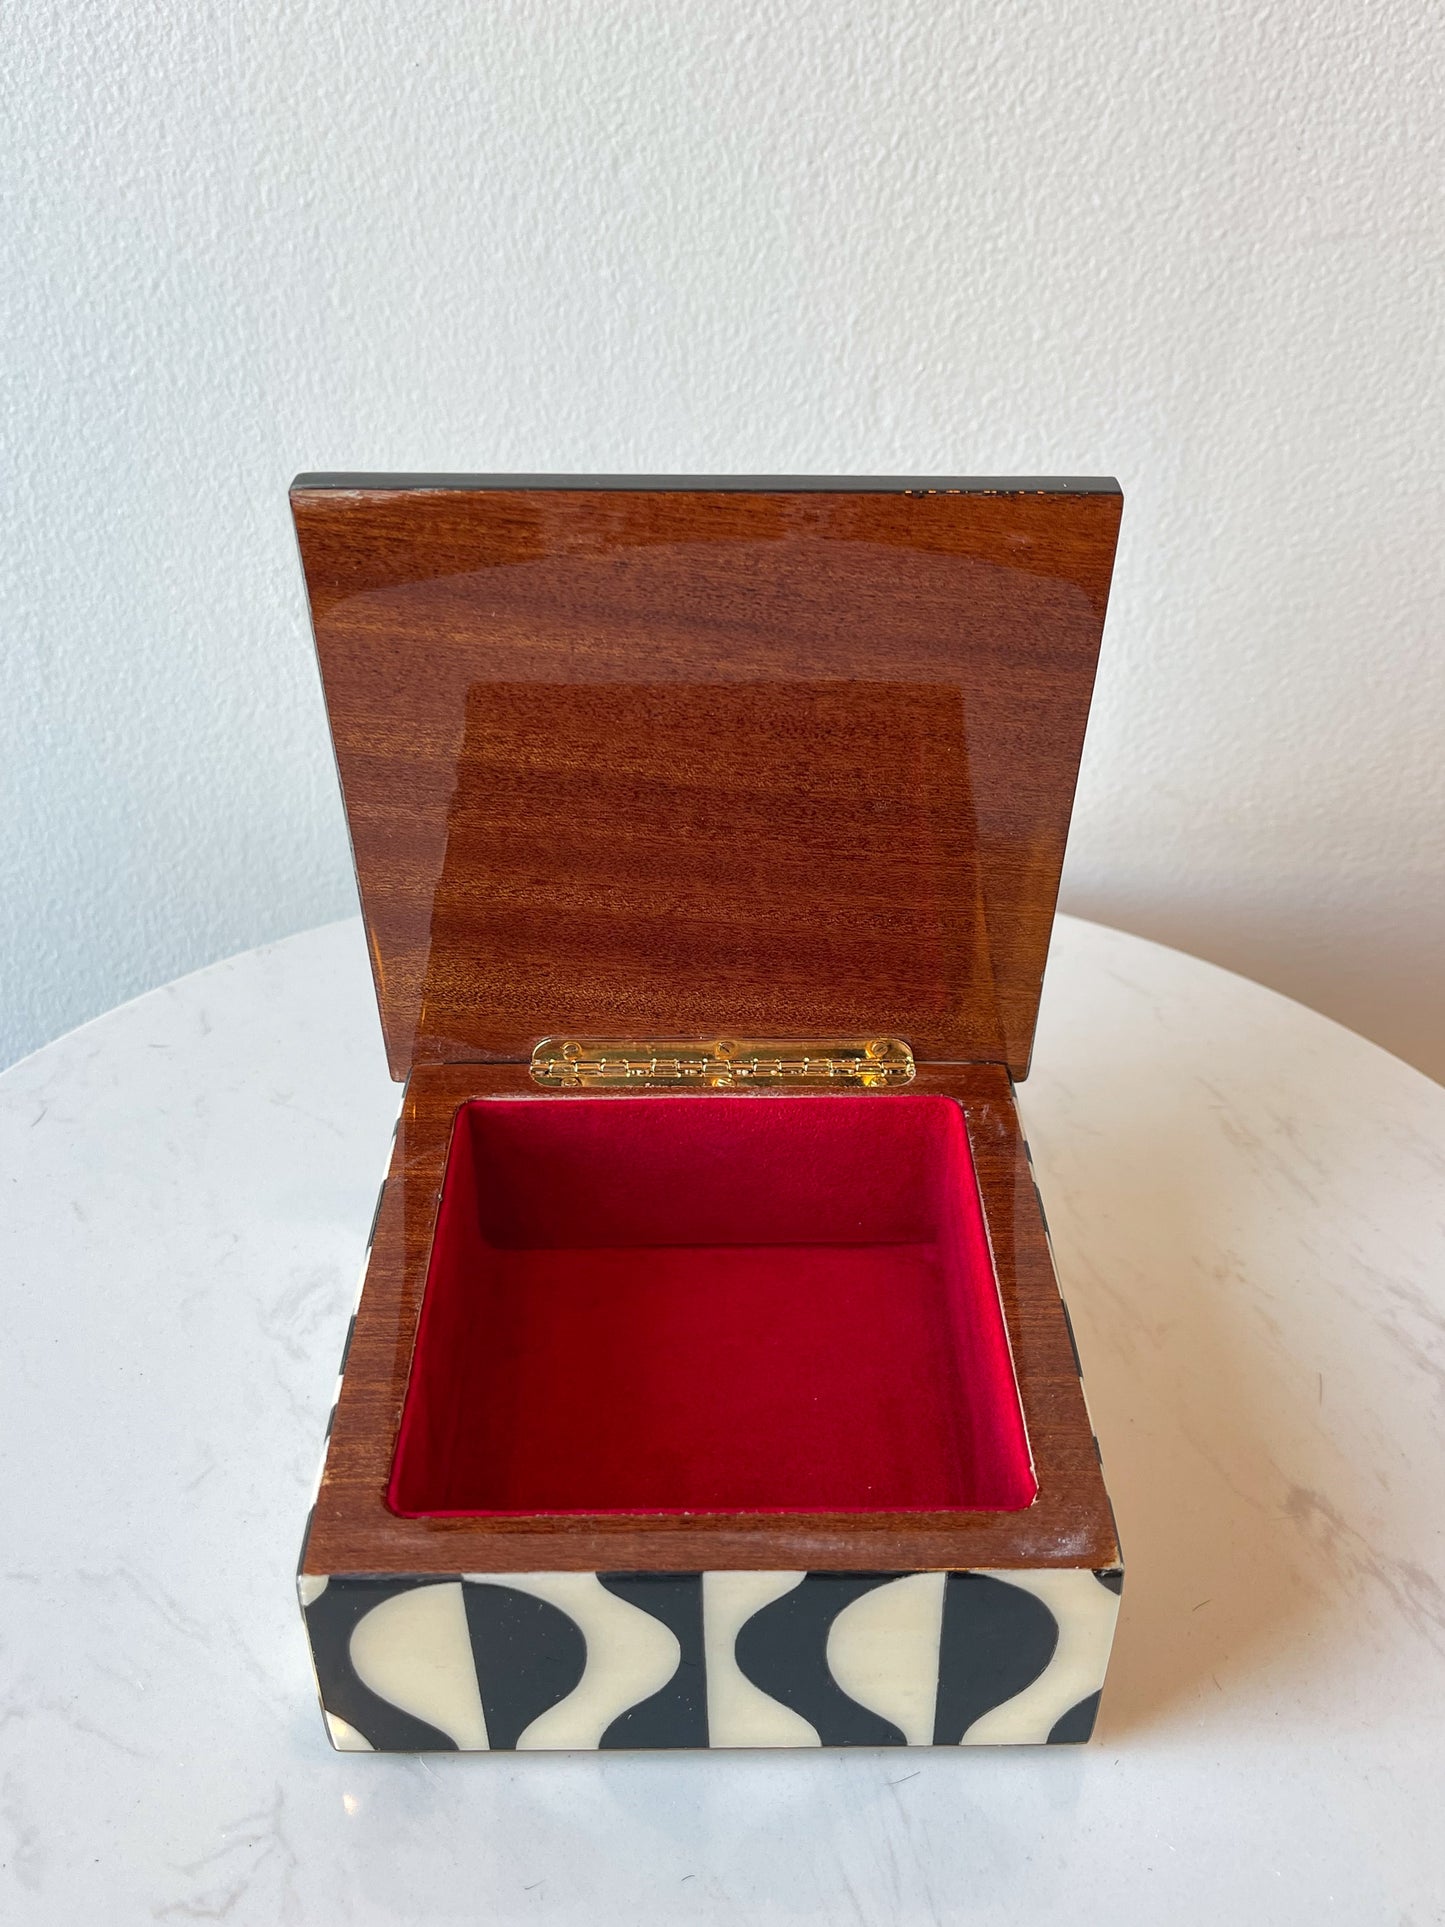 Black Designer Wooden Inlay Box, Design 2 - Made in Sorrento, Italy